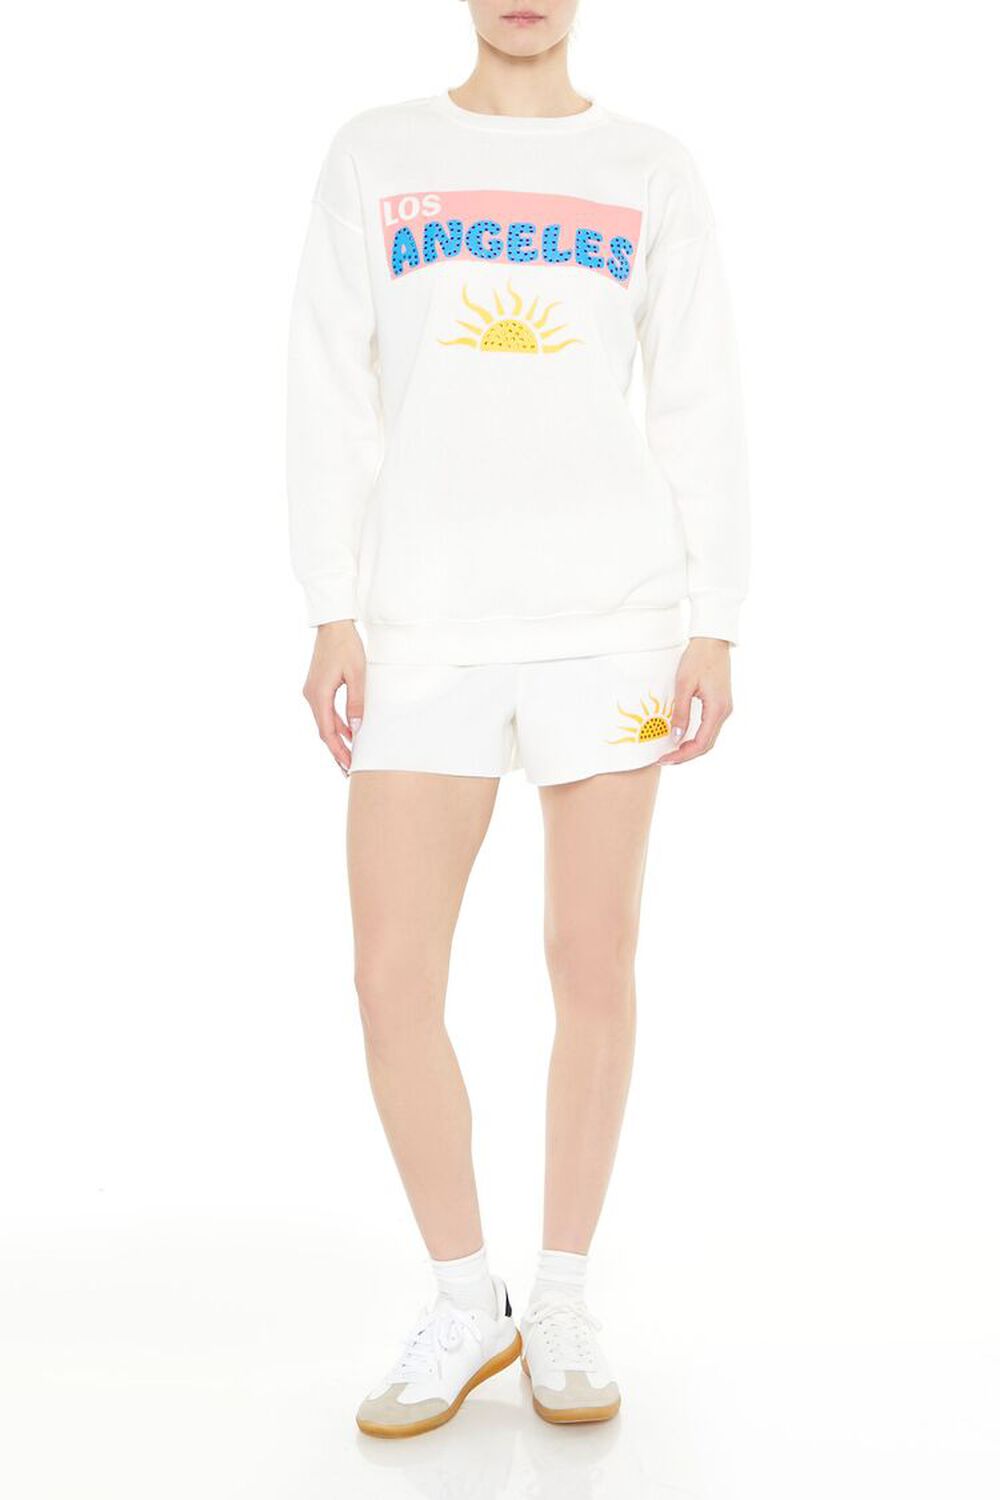 WHITE/MULTI Fleece Rhinestone Sun Shorts, image 1